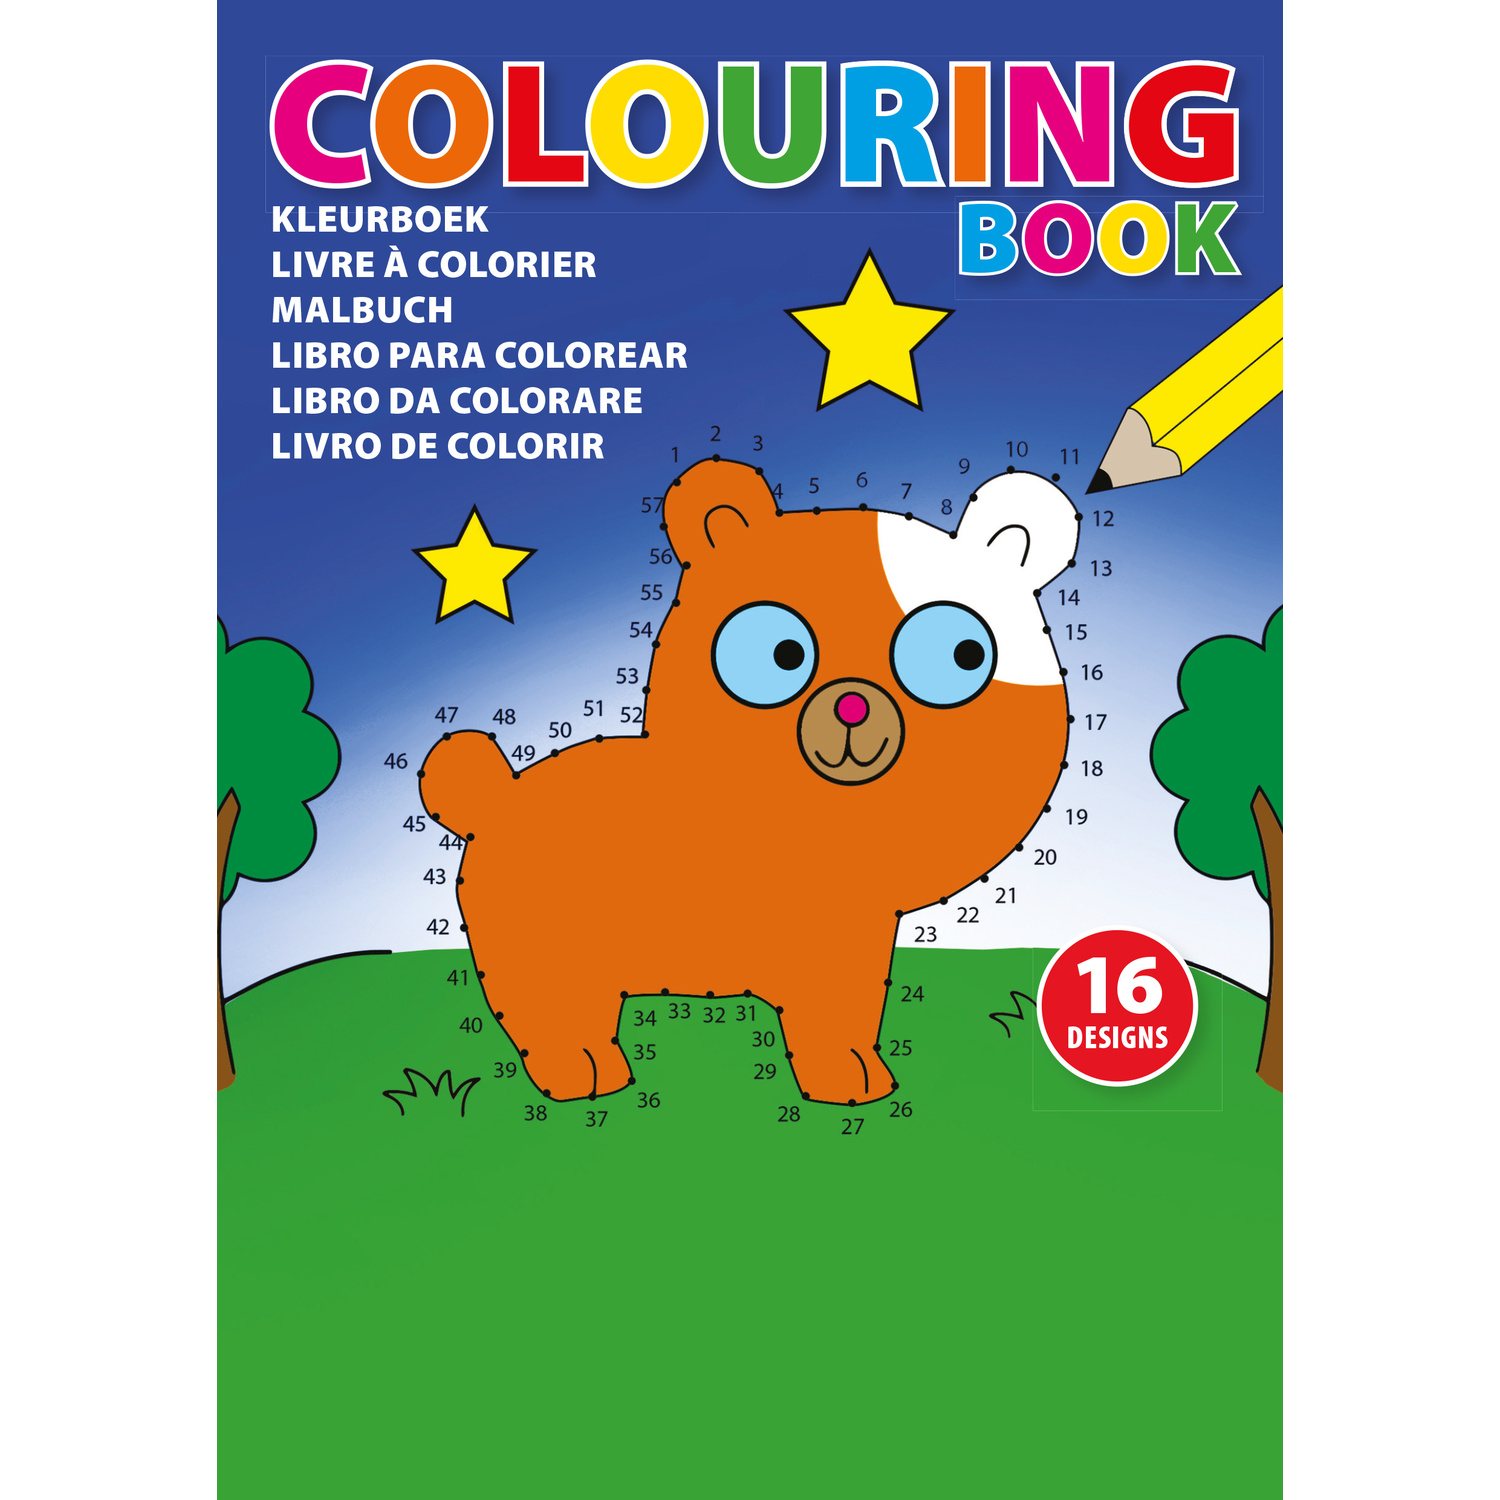 004598 009999999 2d090 frt pro01 fal - Children's colouring book